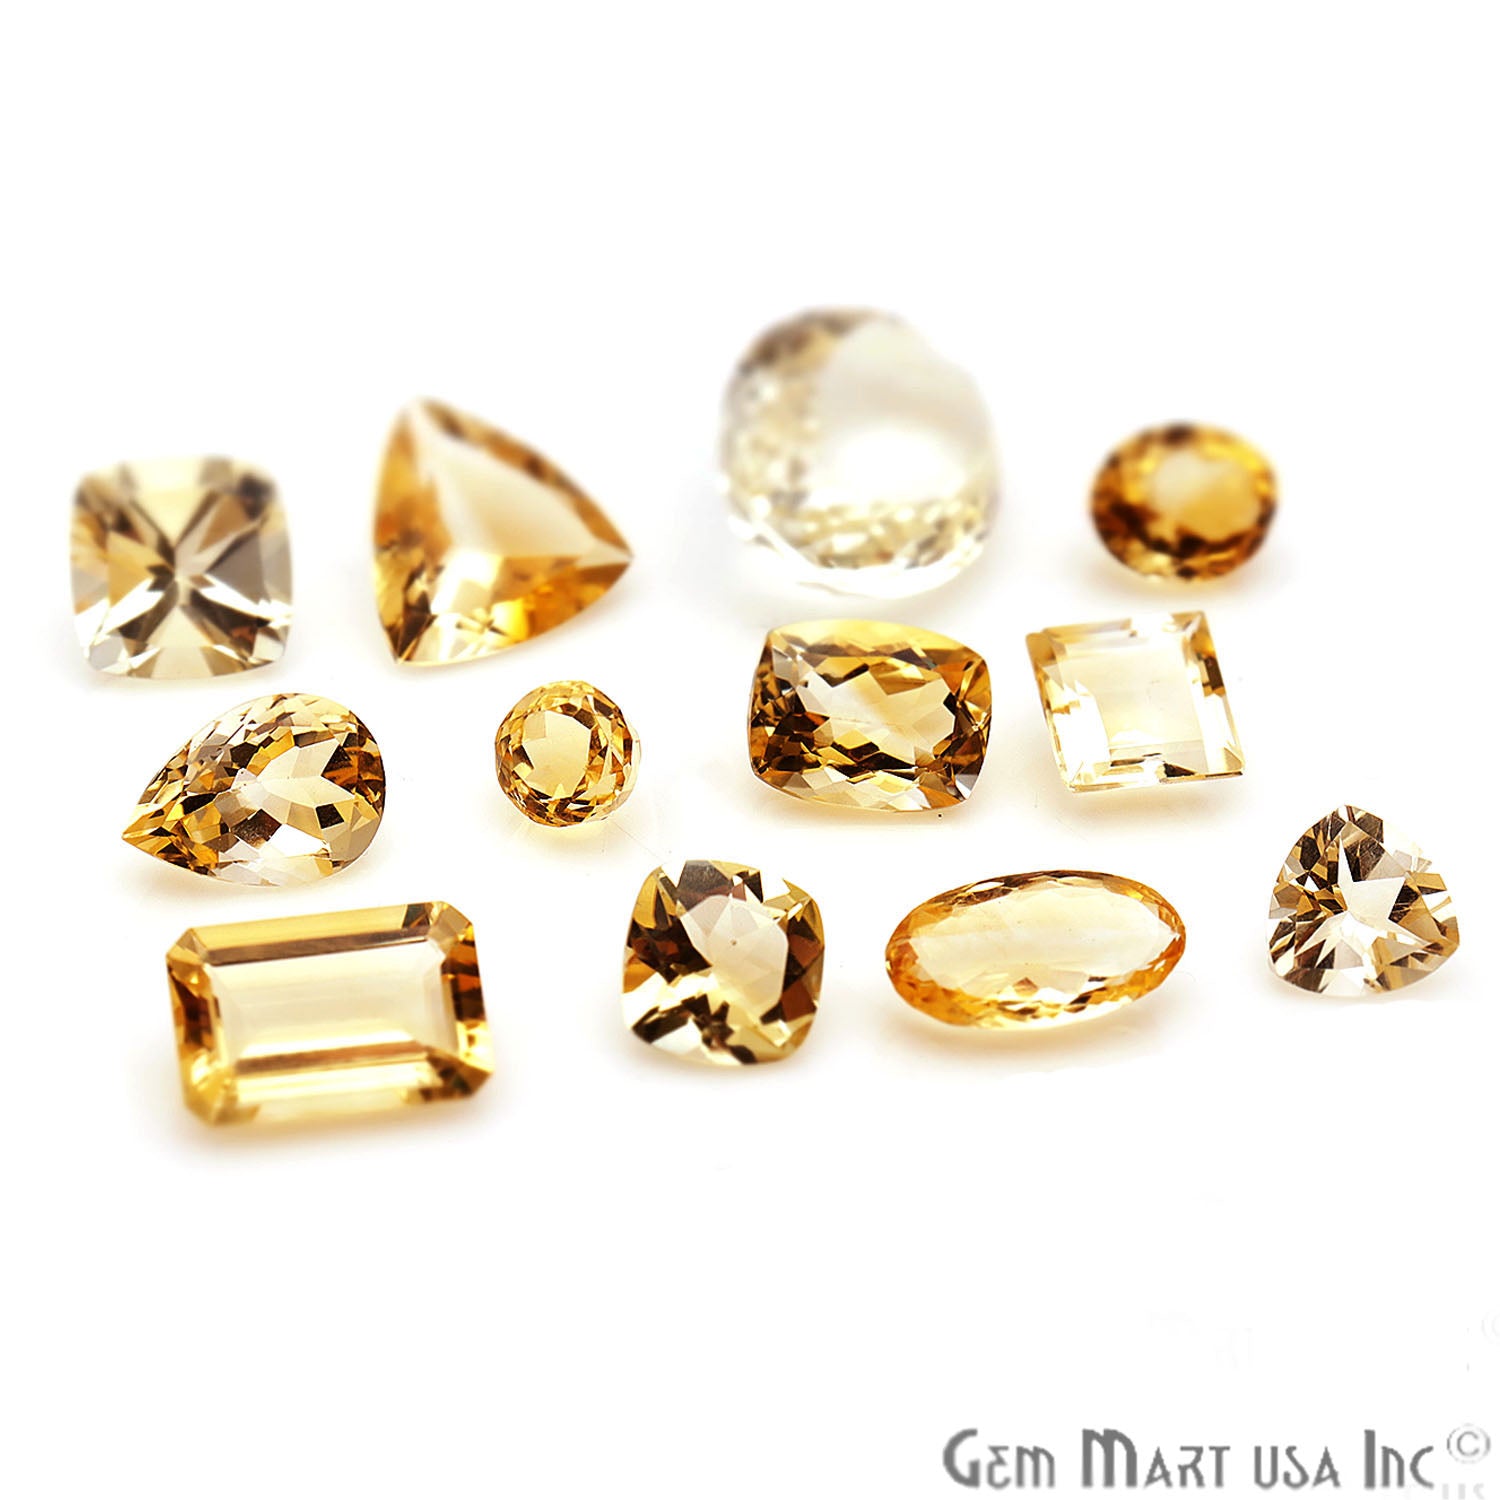 100 Cts Mix Citrine Stones 10-15mm Faceted Precious Loose Gemstones - GemMartUSA